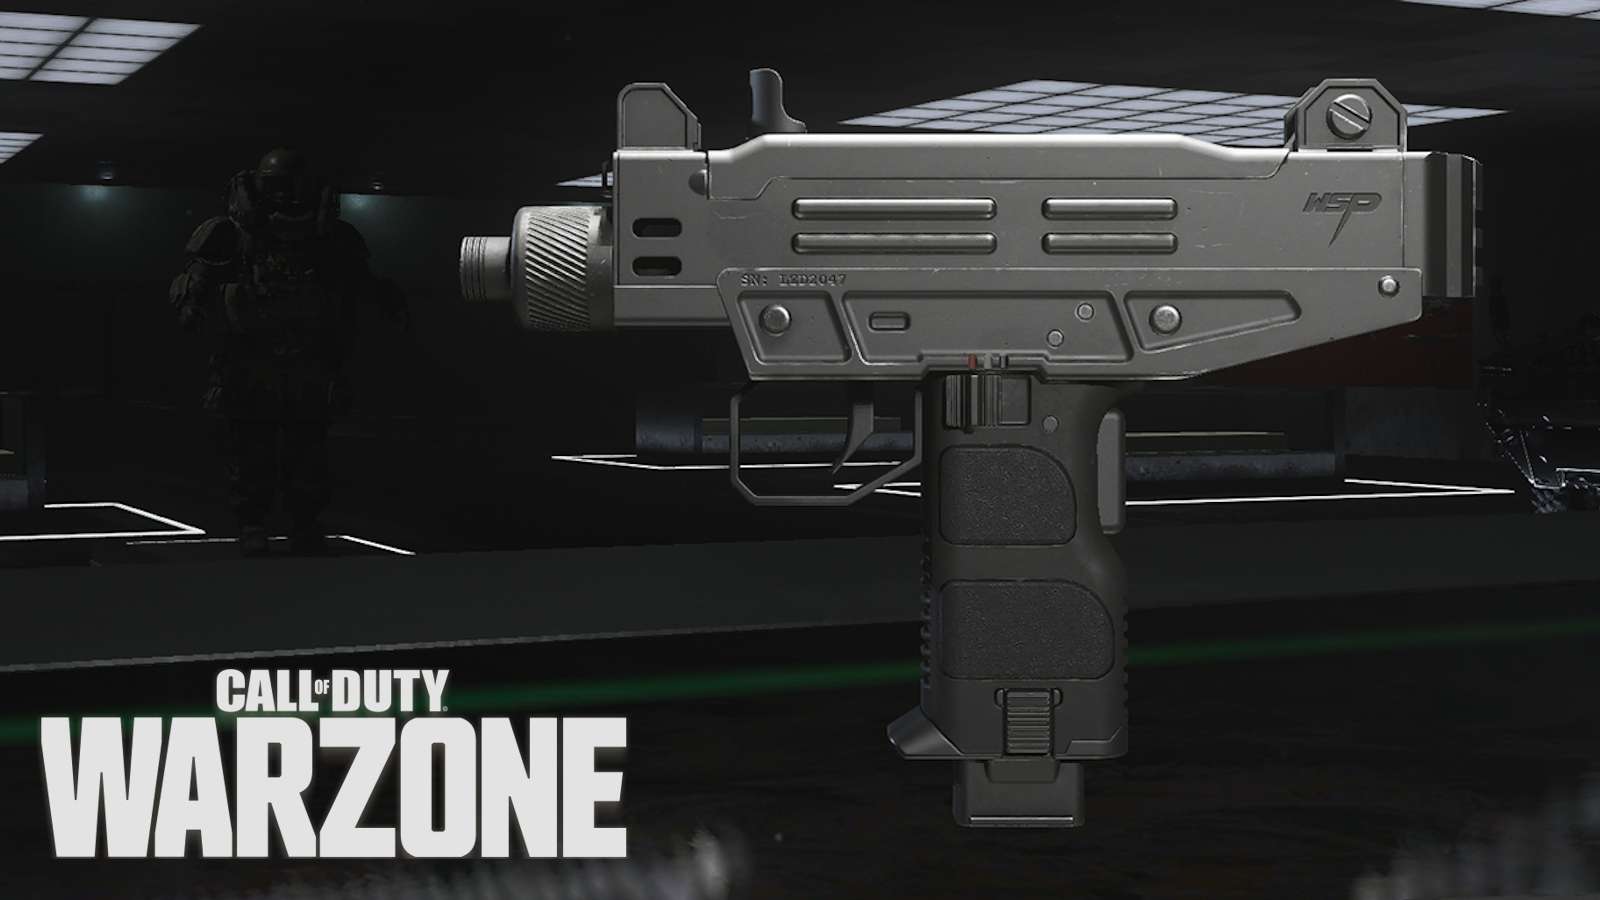 WSP Stinger pistol with Warzone logo.